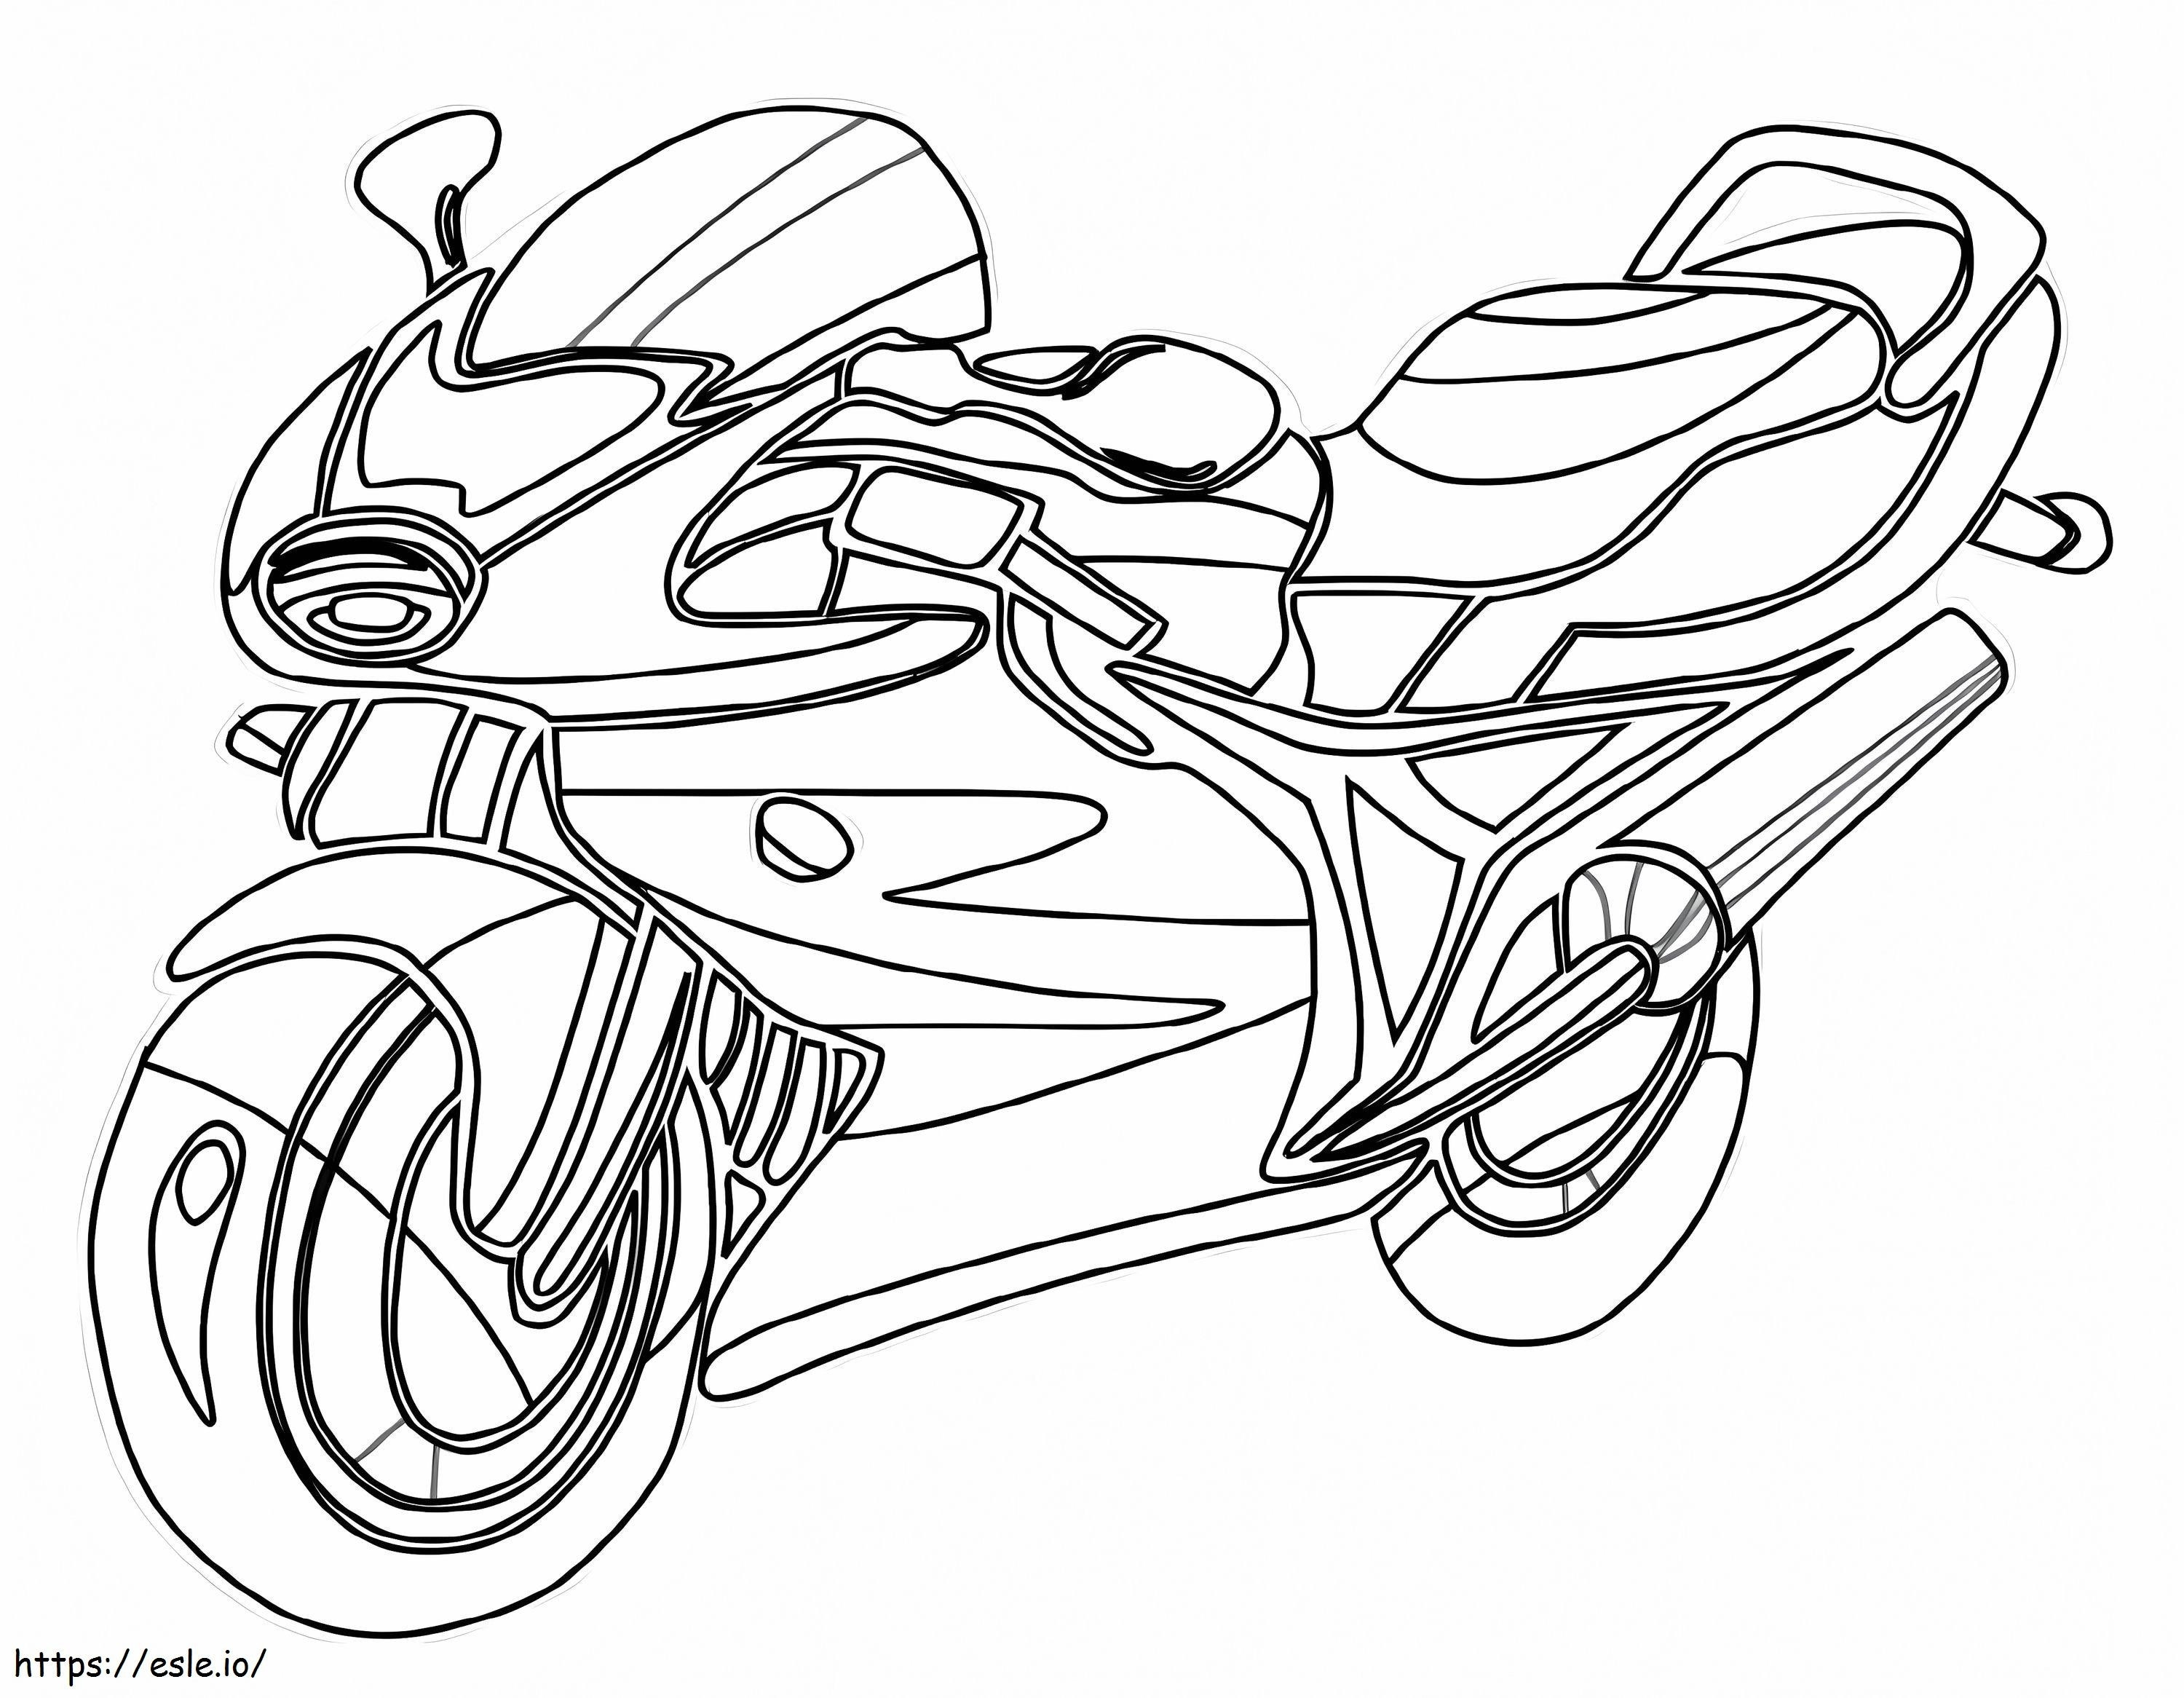 Motocykl 1 kolorowanka